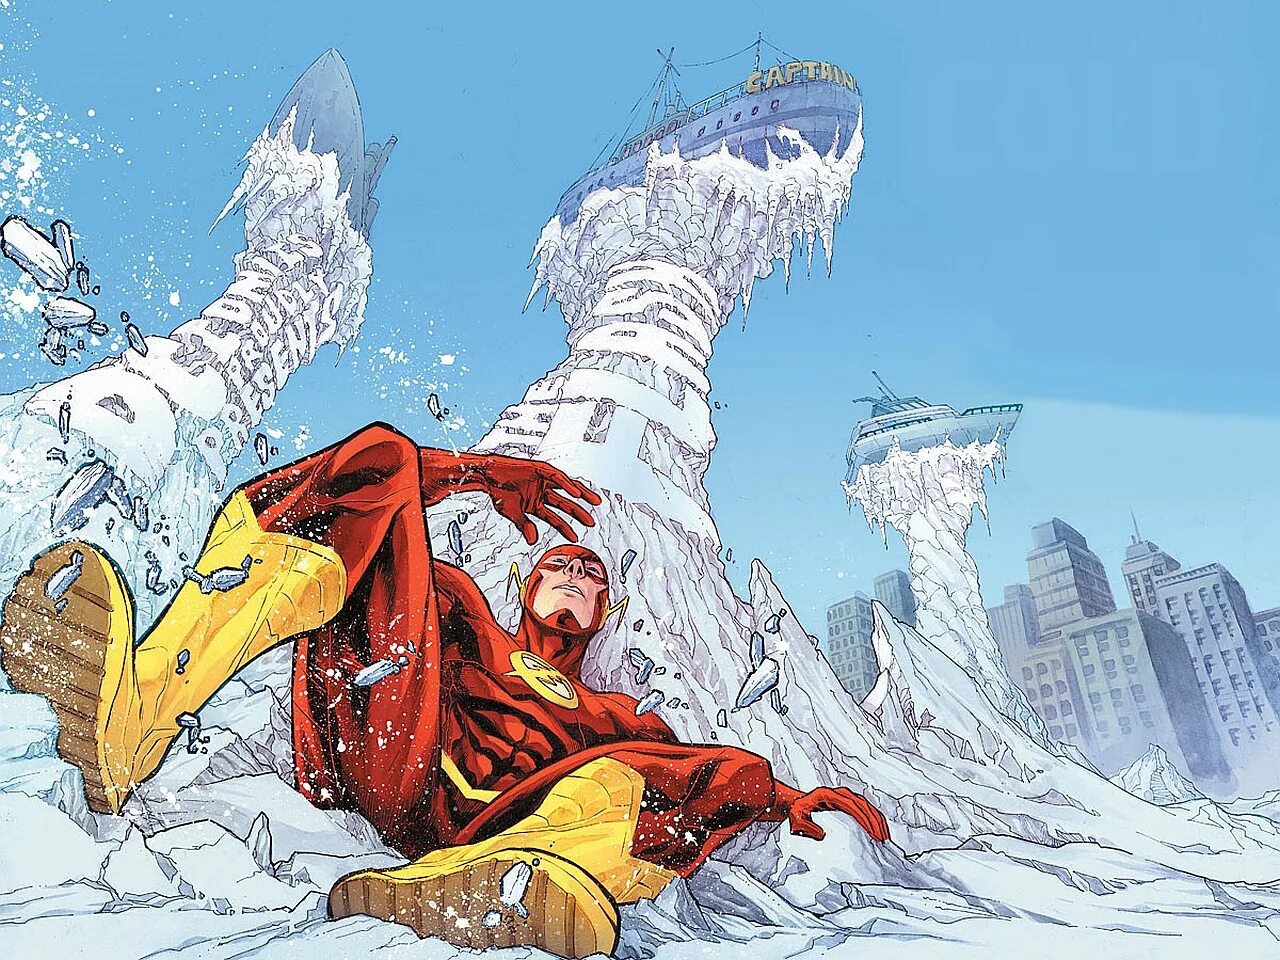 Served cold. Барри Аллен комикс. Барри Аллен флэш комикс. Barry Allen (Flash) комикс. Даррен персонаж комикса\.